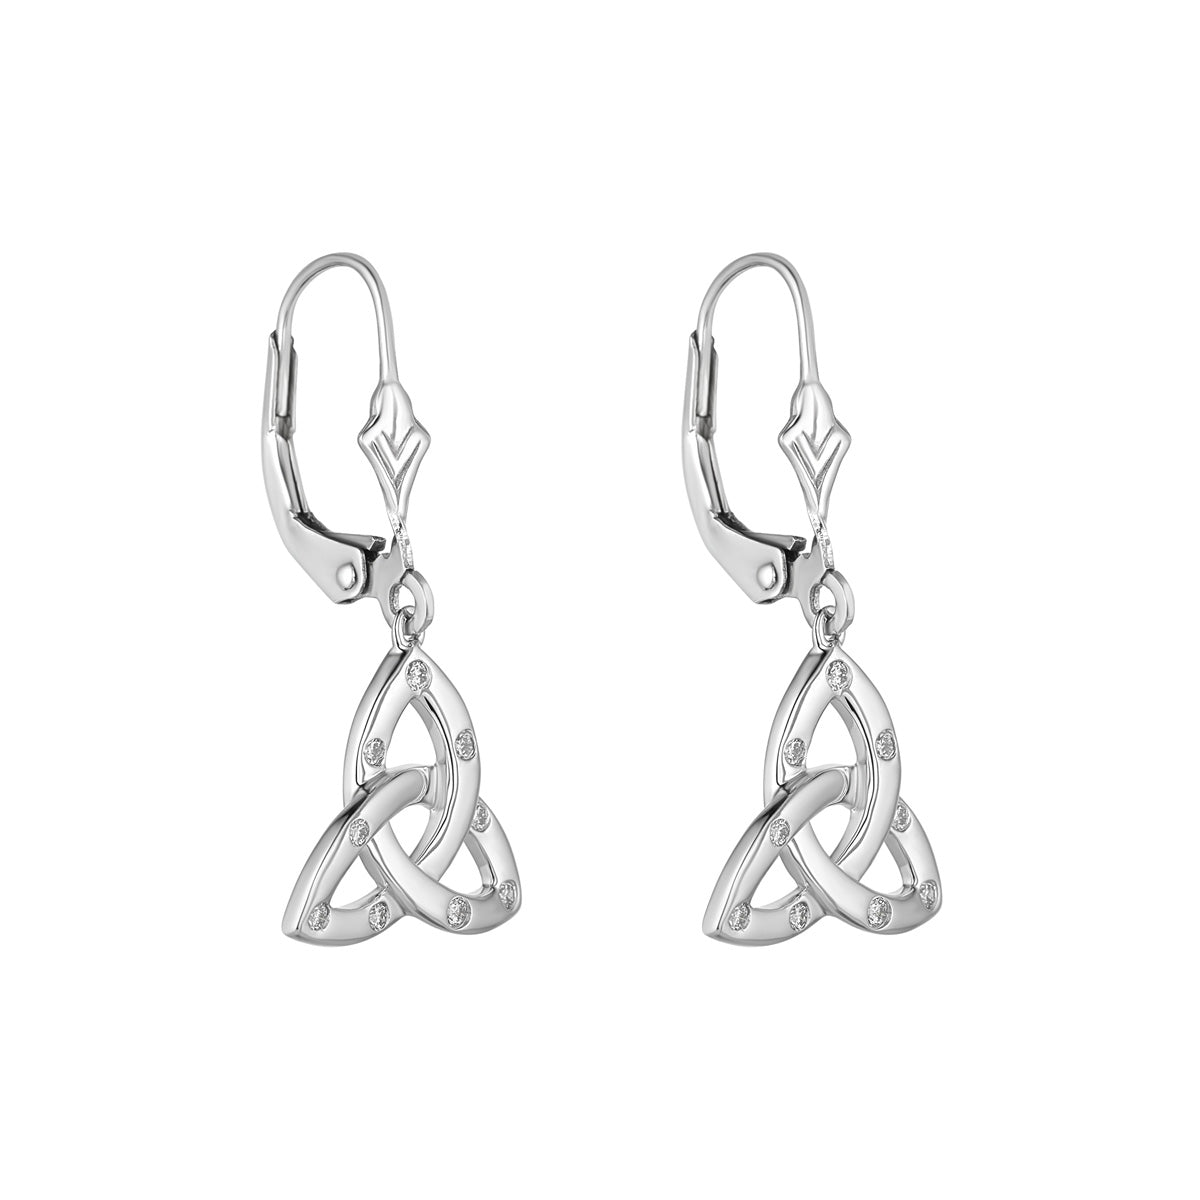 Stock image of Solvar white gold flush set diamond trinity knot drop earrings s34225